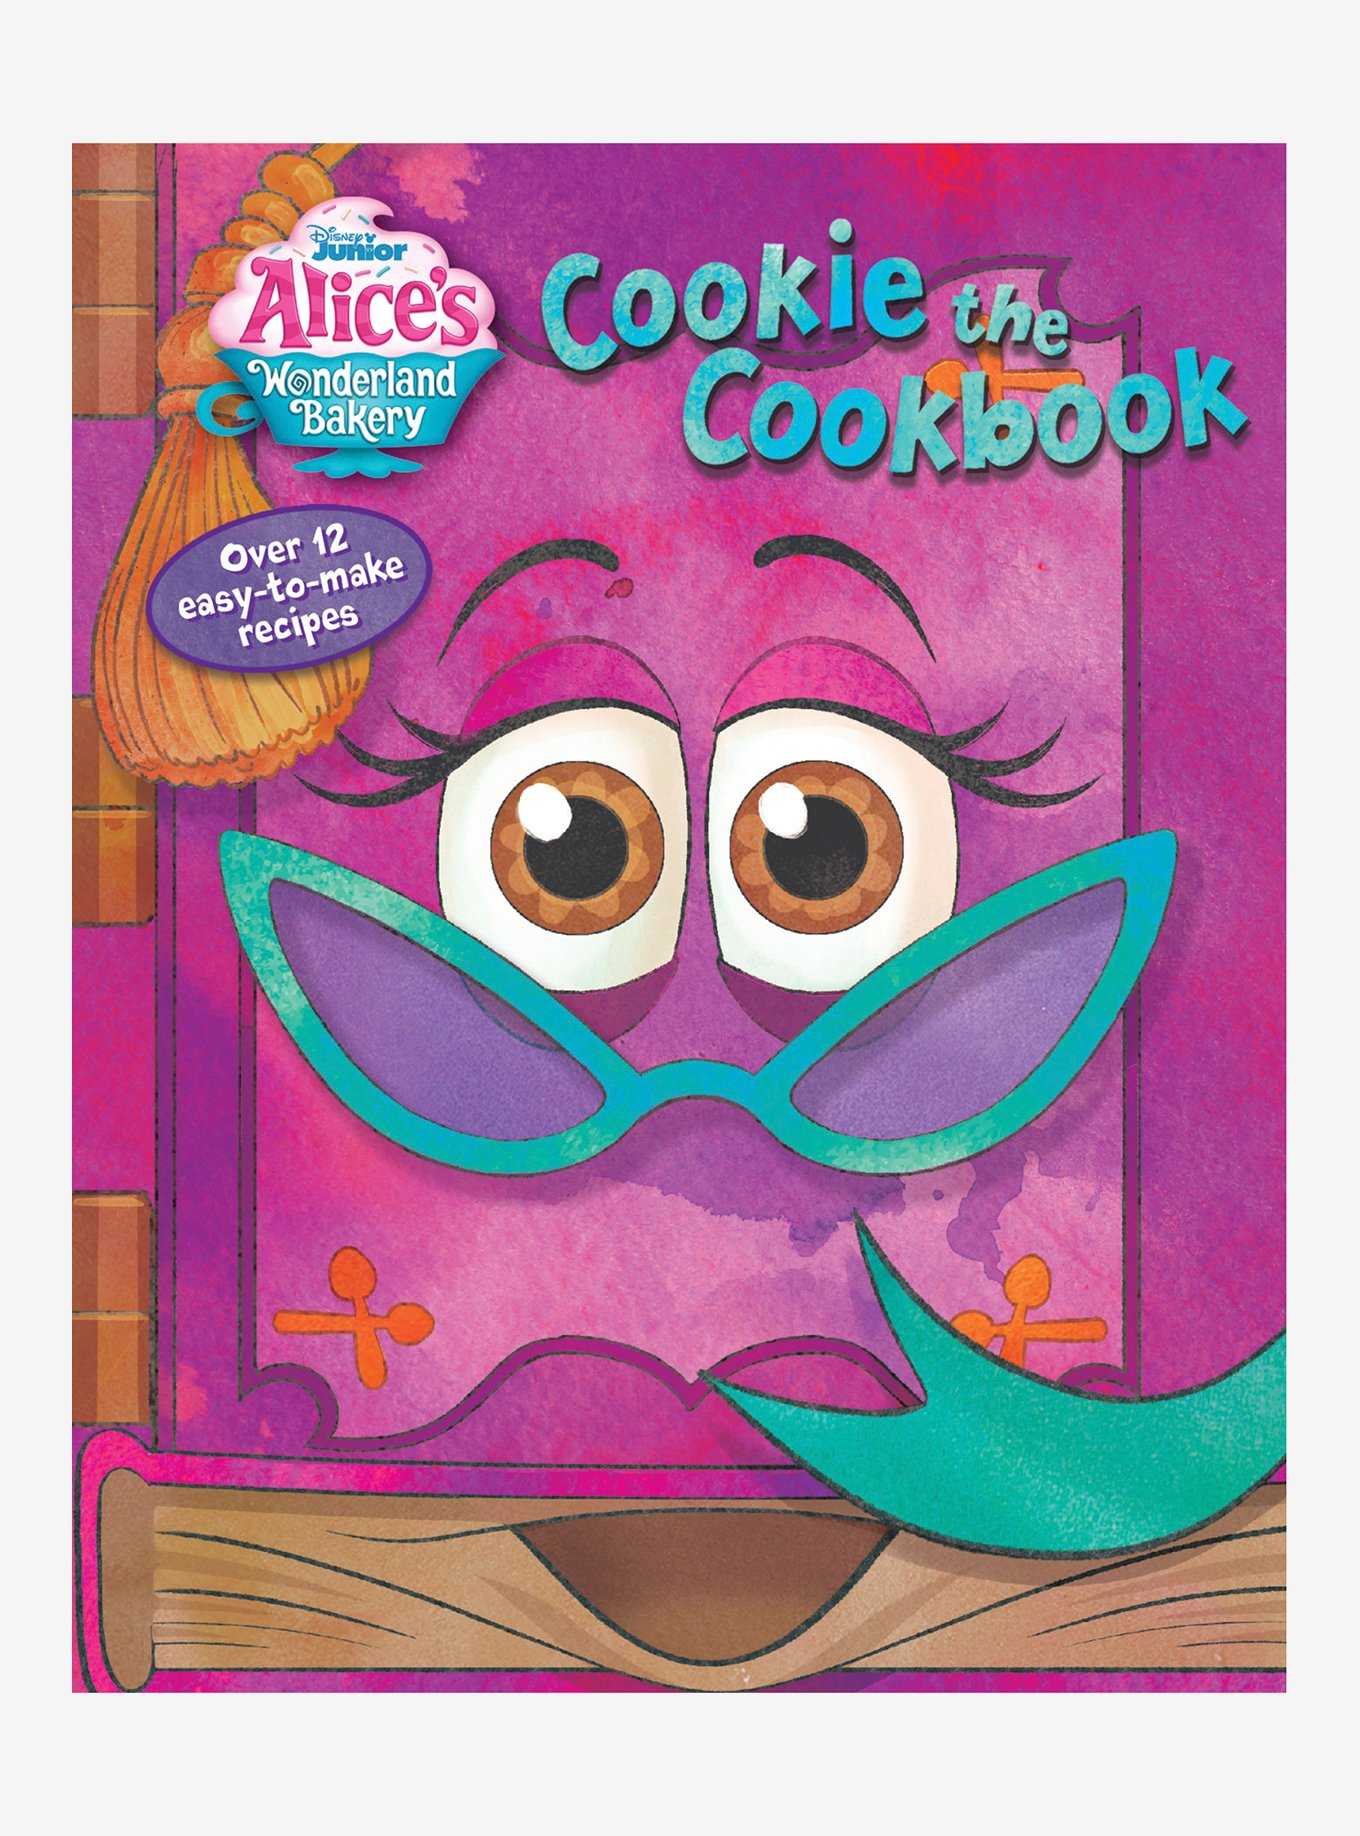 Disney Junior Alice's Wonderland Bakery Cookie the Cookbook Recipe 